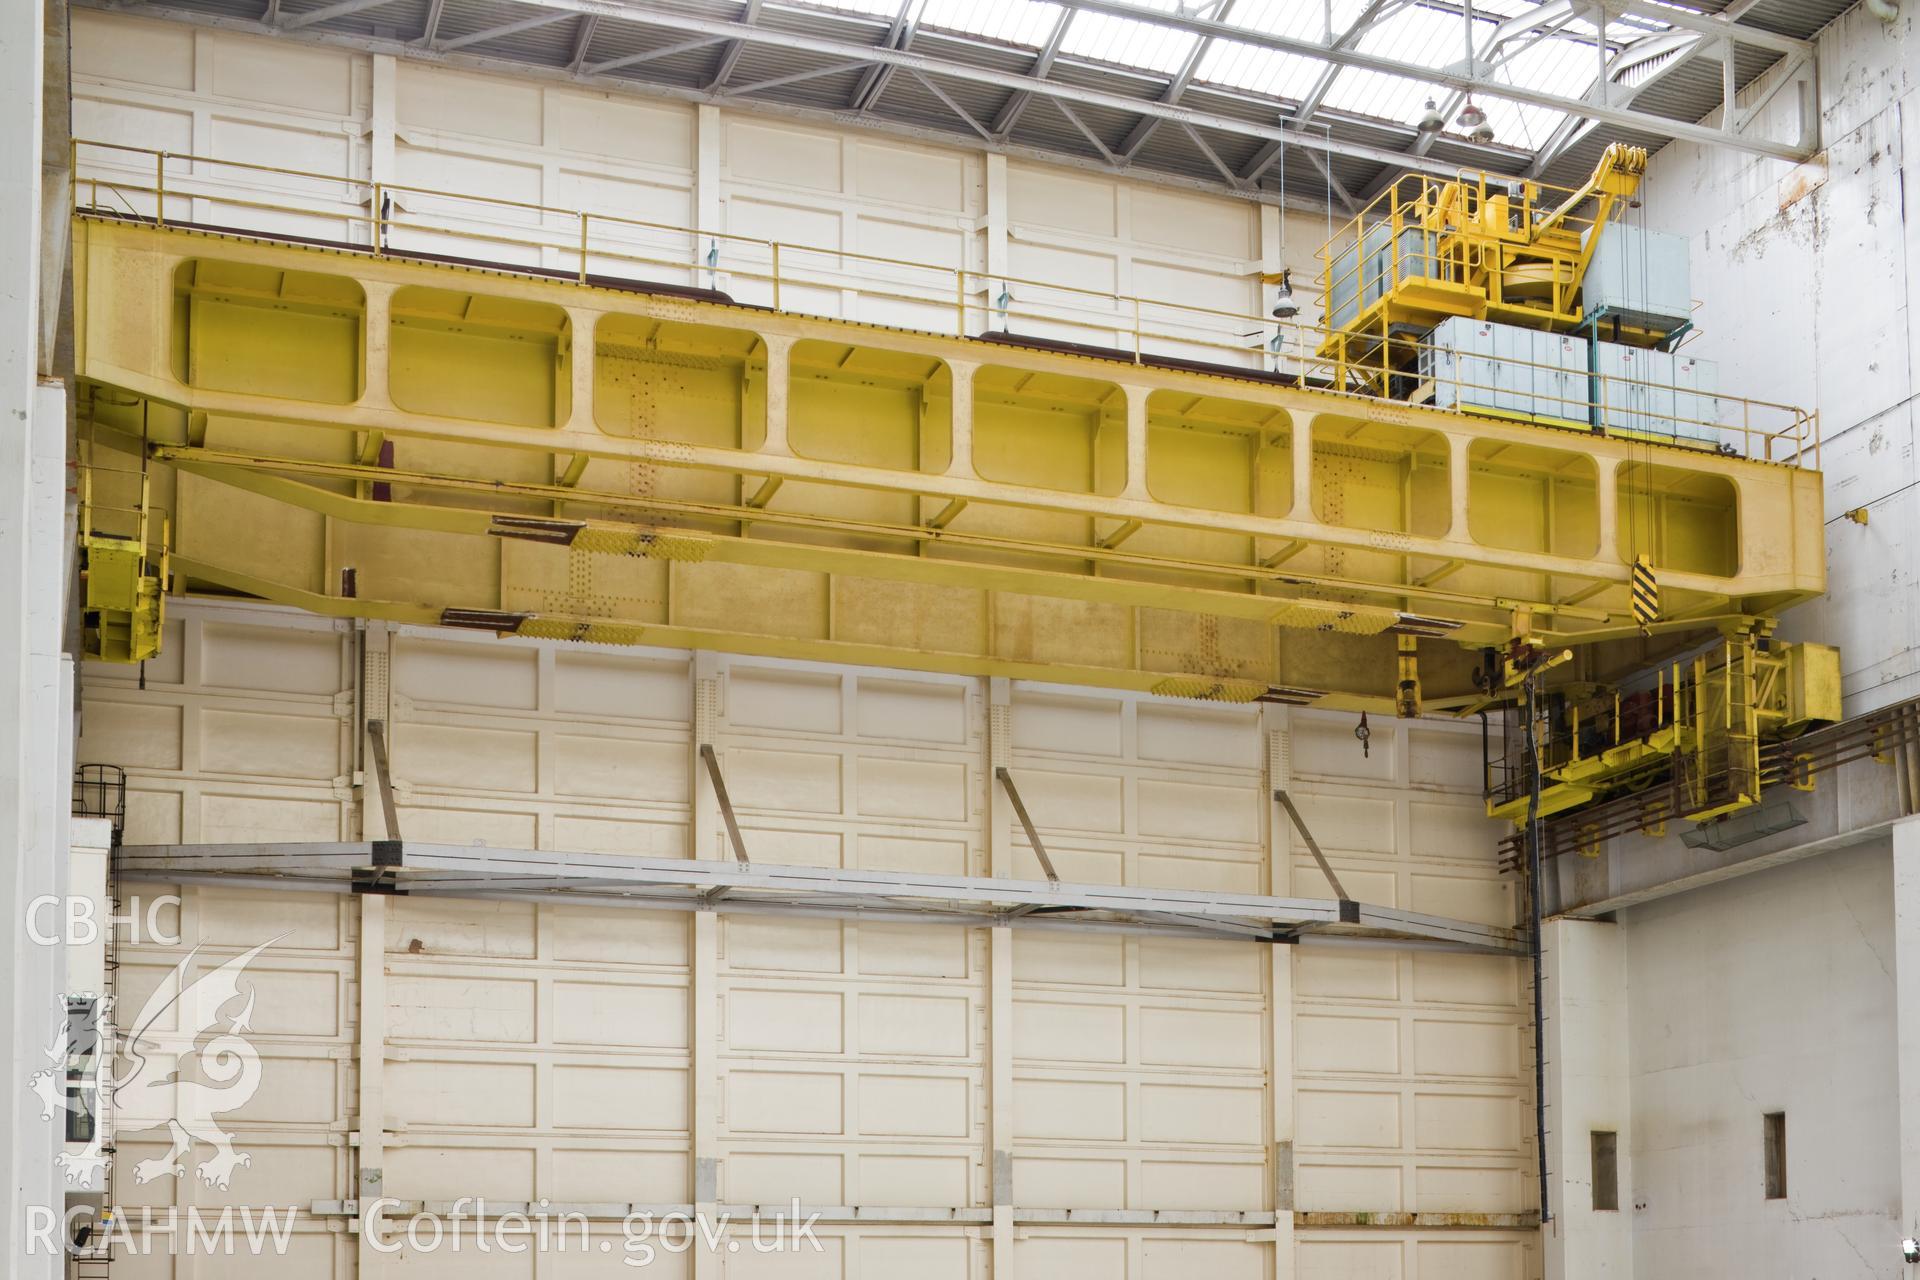 Overhead crane for charging reactor core.